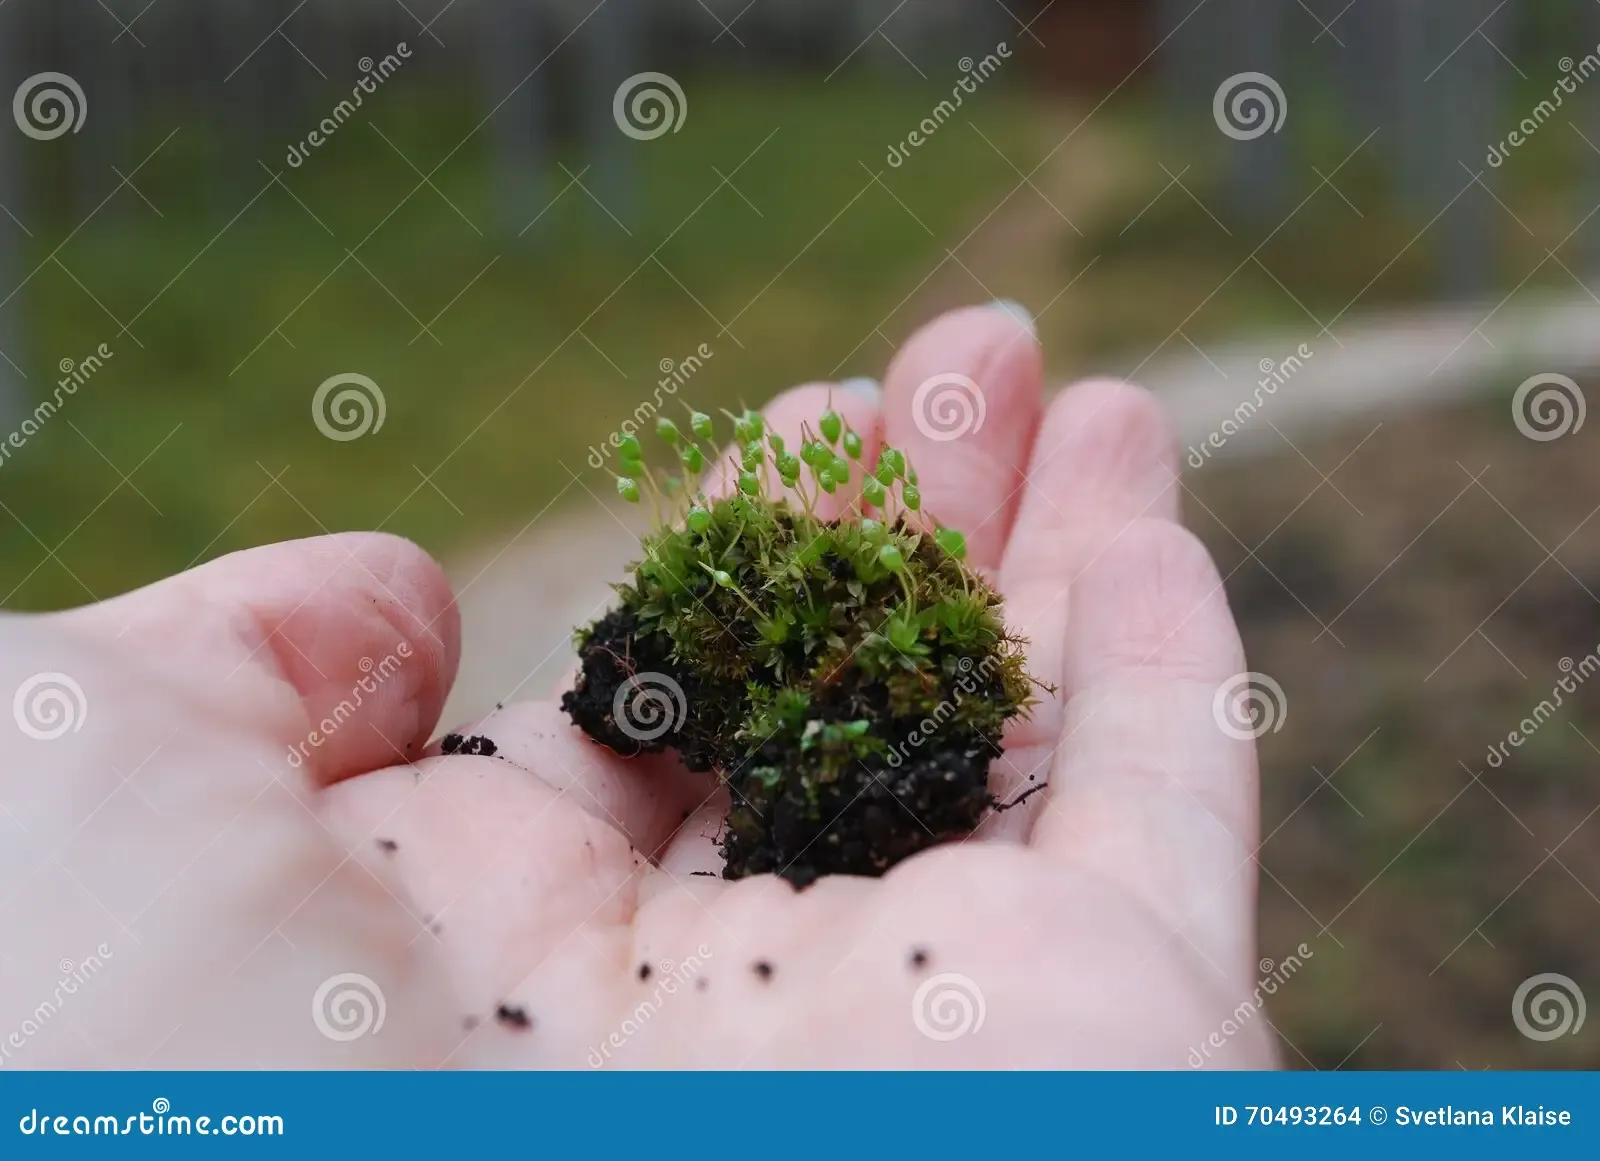 hand-holding-ground-bartramia-pomiformis-moss-common-apple-species-bartramiaceae-family-70493264.jpg